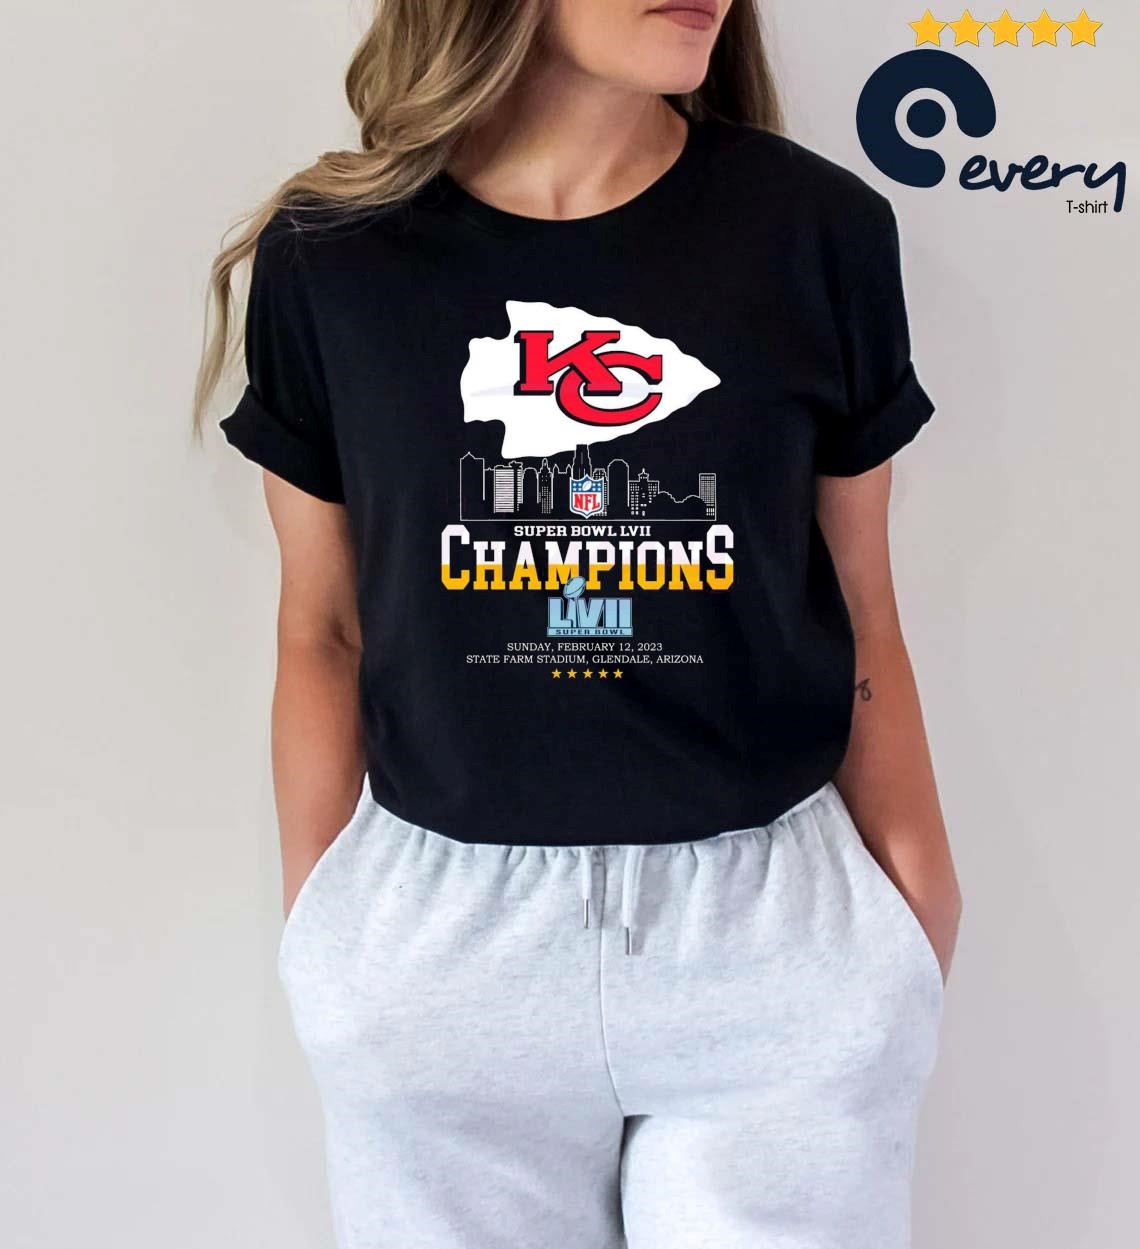 Kansas City Chiefs Super Bowl LVII Champions NFL Champions State Farm Stadium Clendale Arizona Shirt